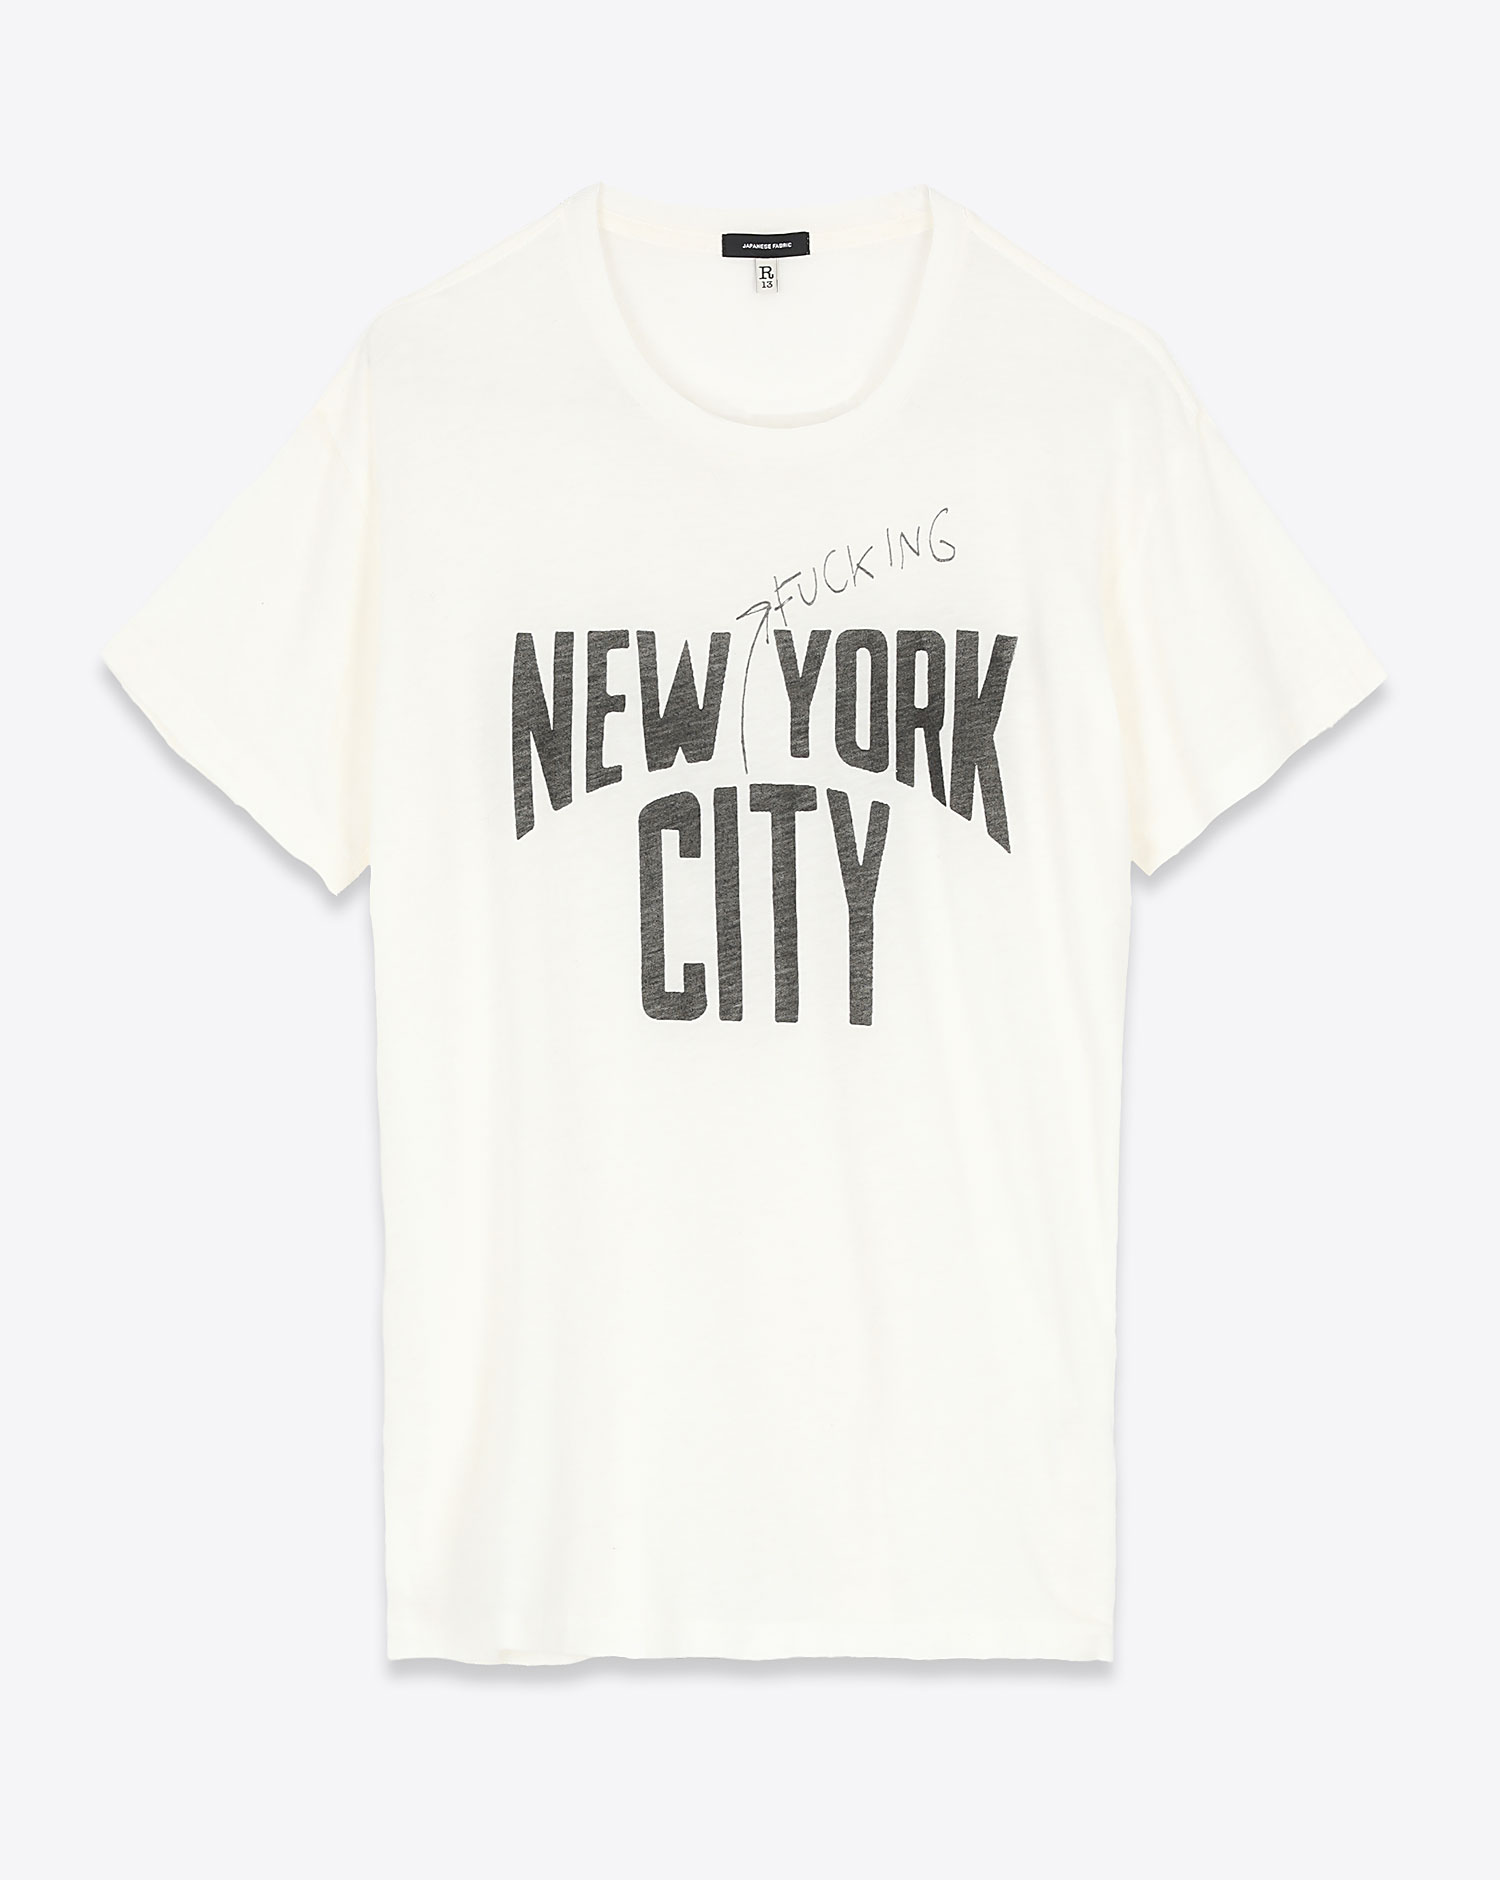 Tee-shirt NYFC Boy T R13 Denim écru.